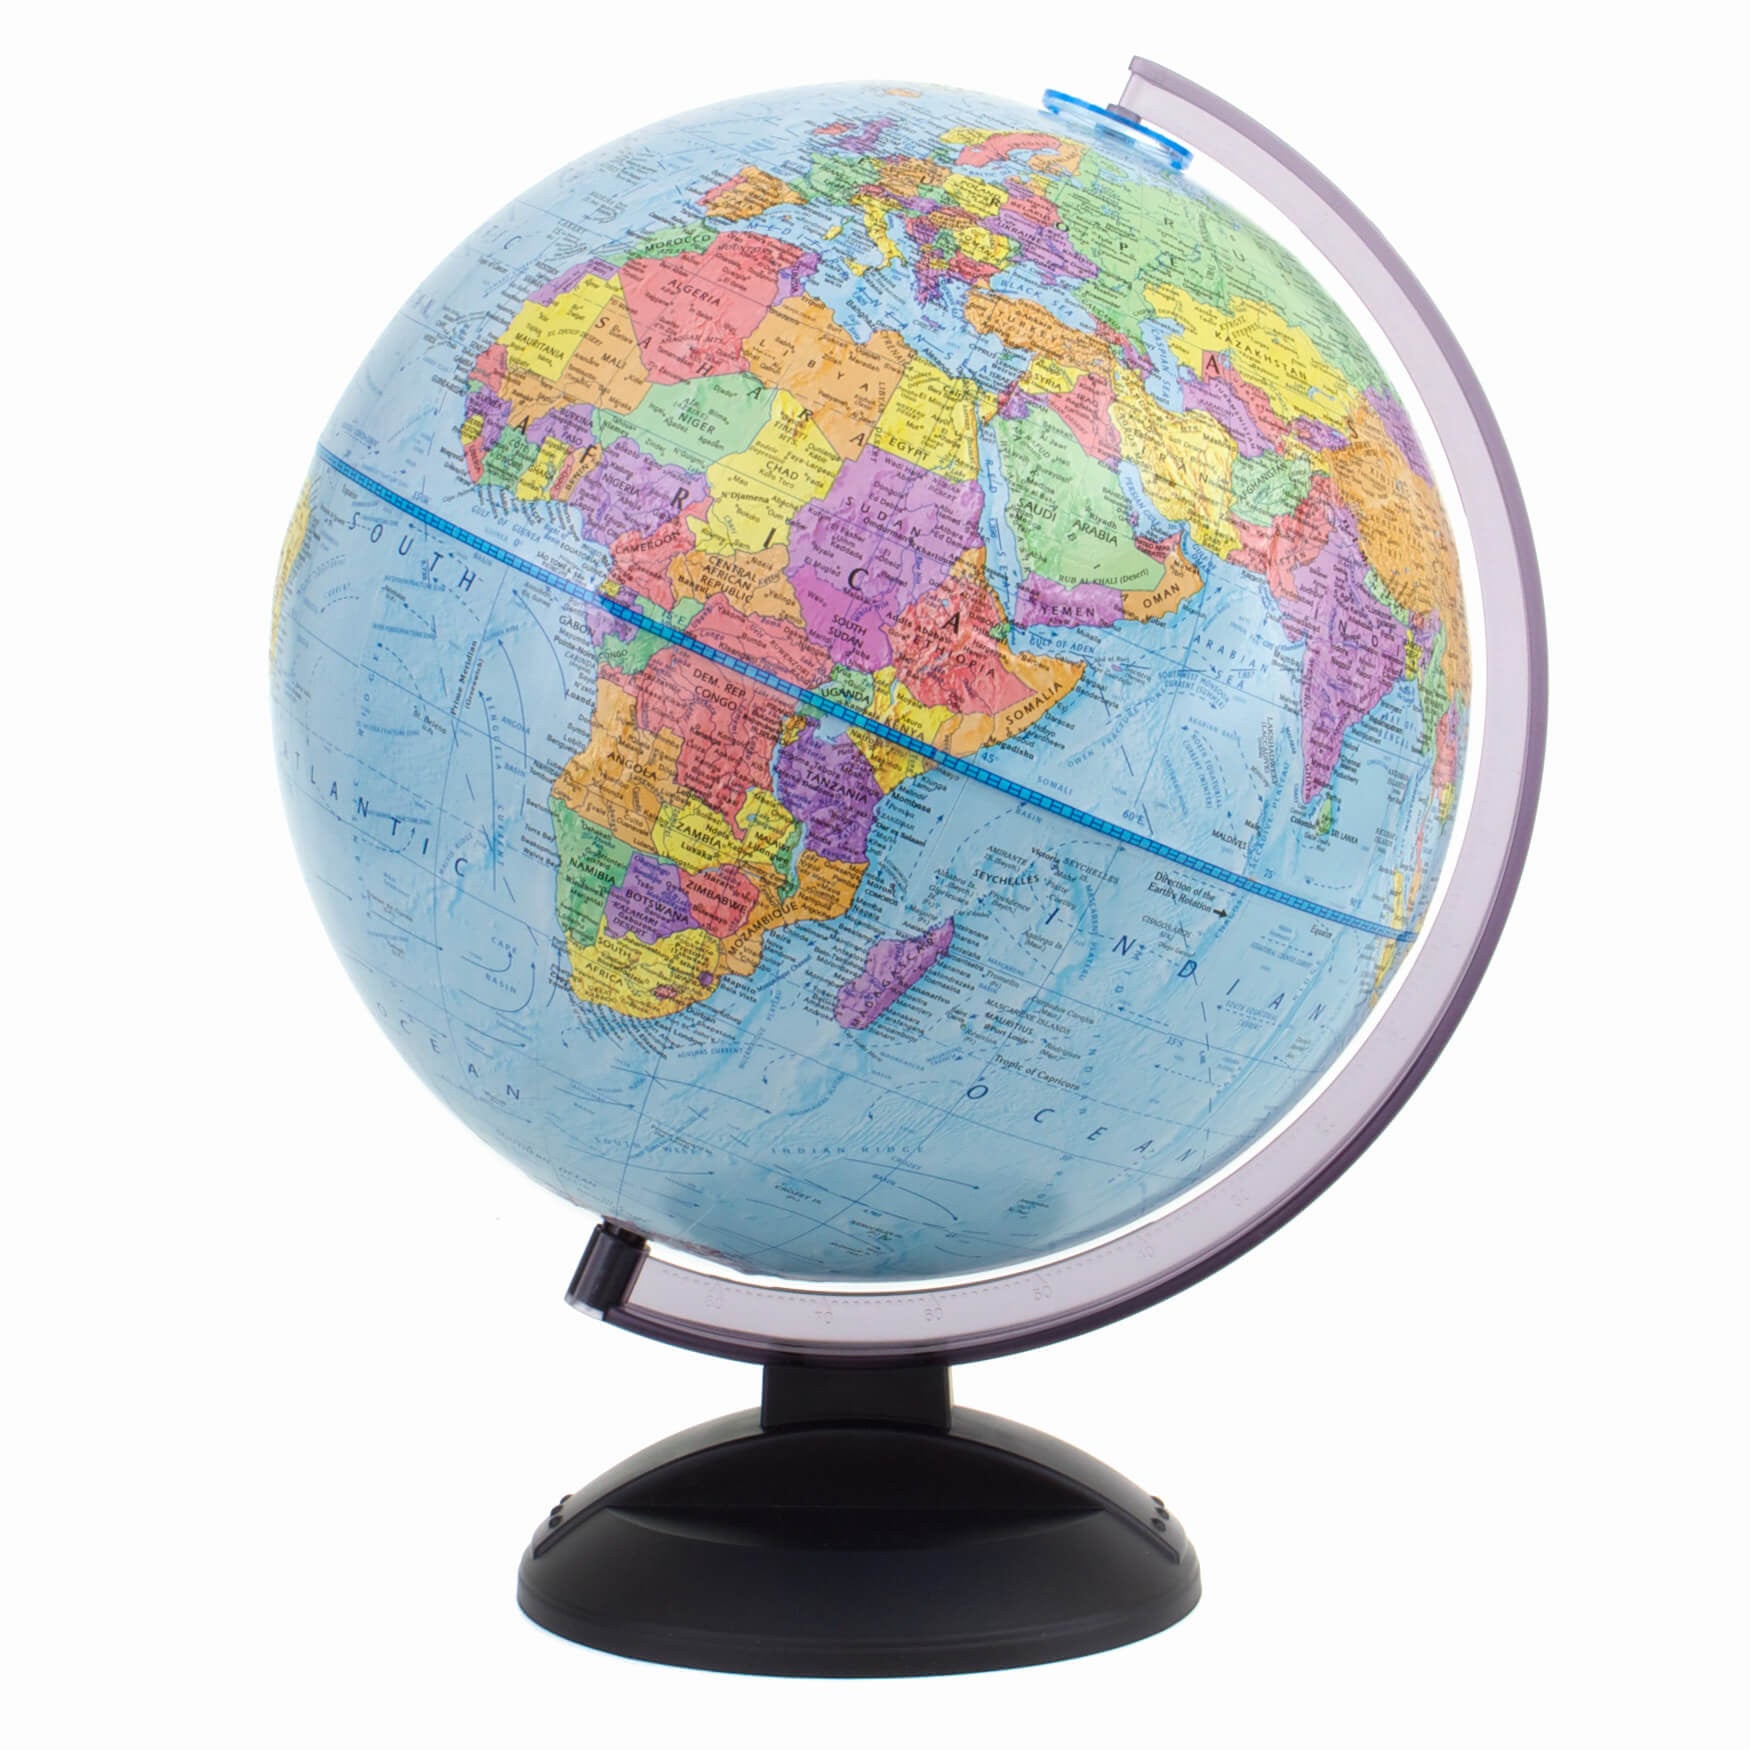 The Traveller 30cm Globe by Replogle